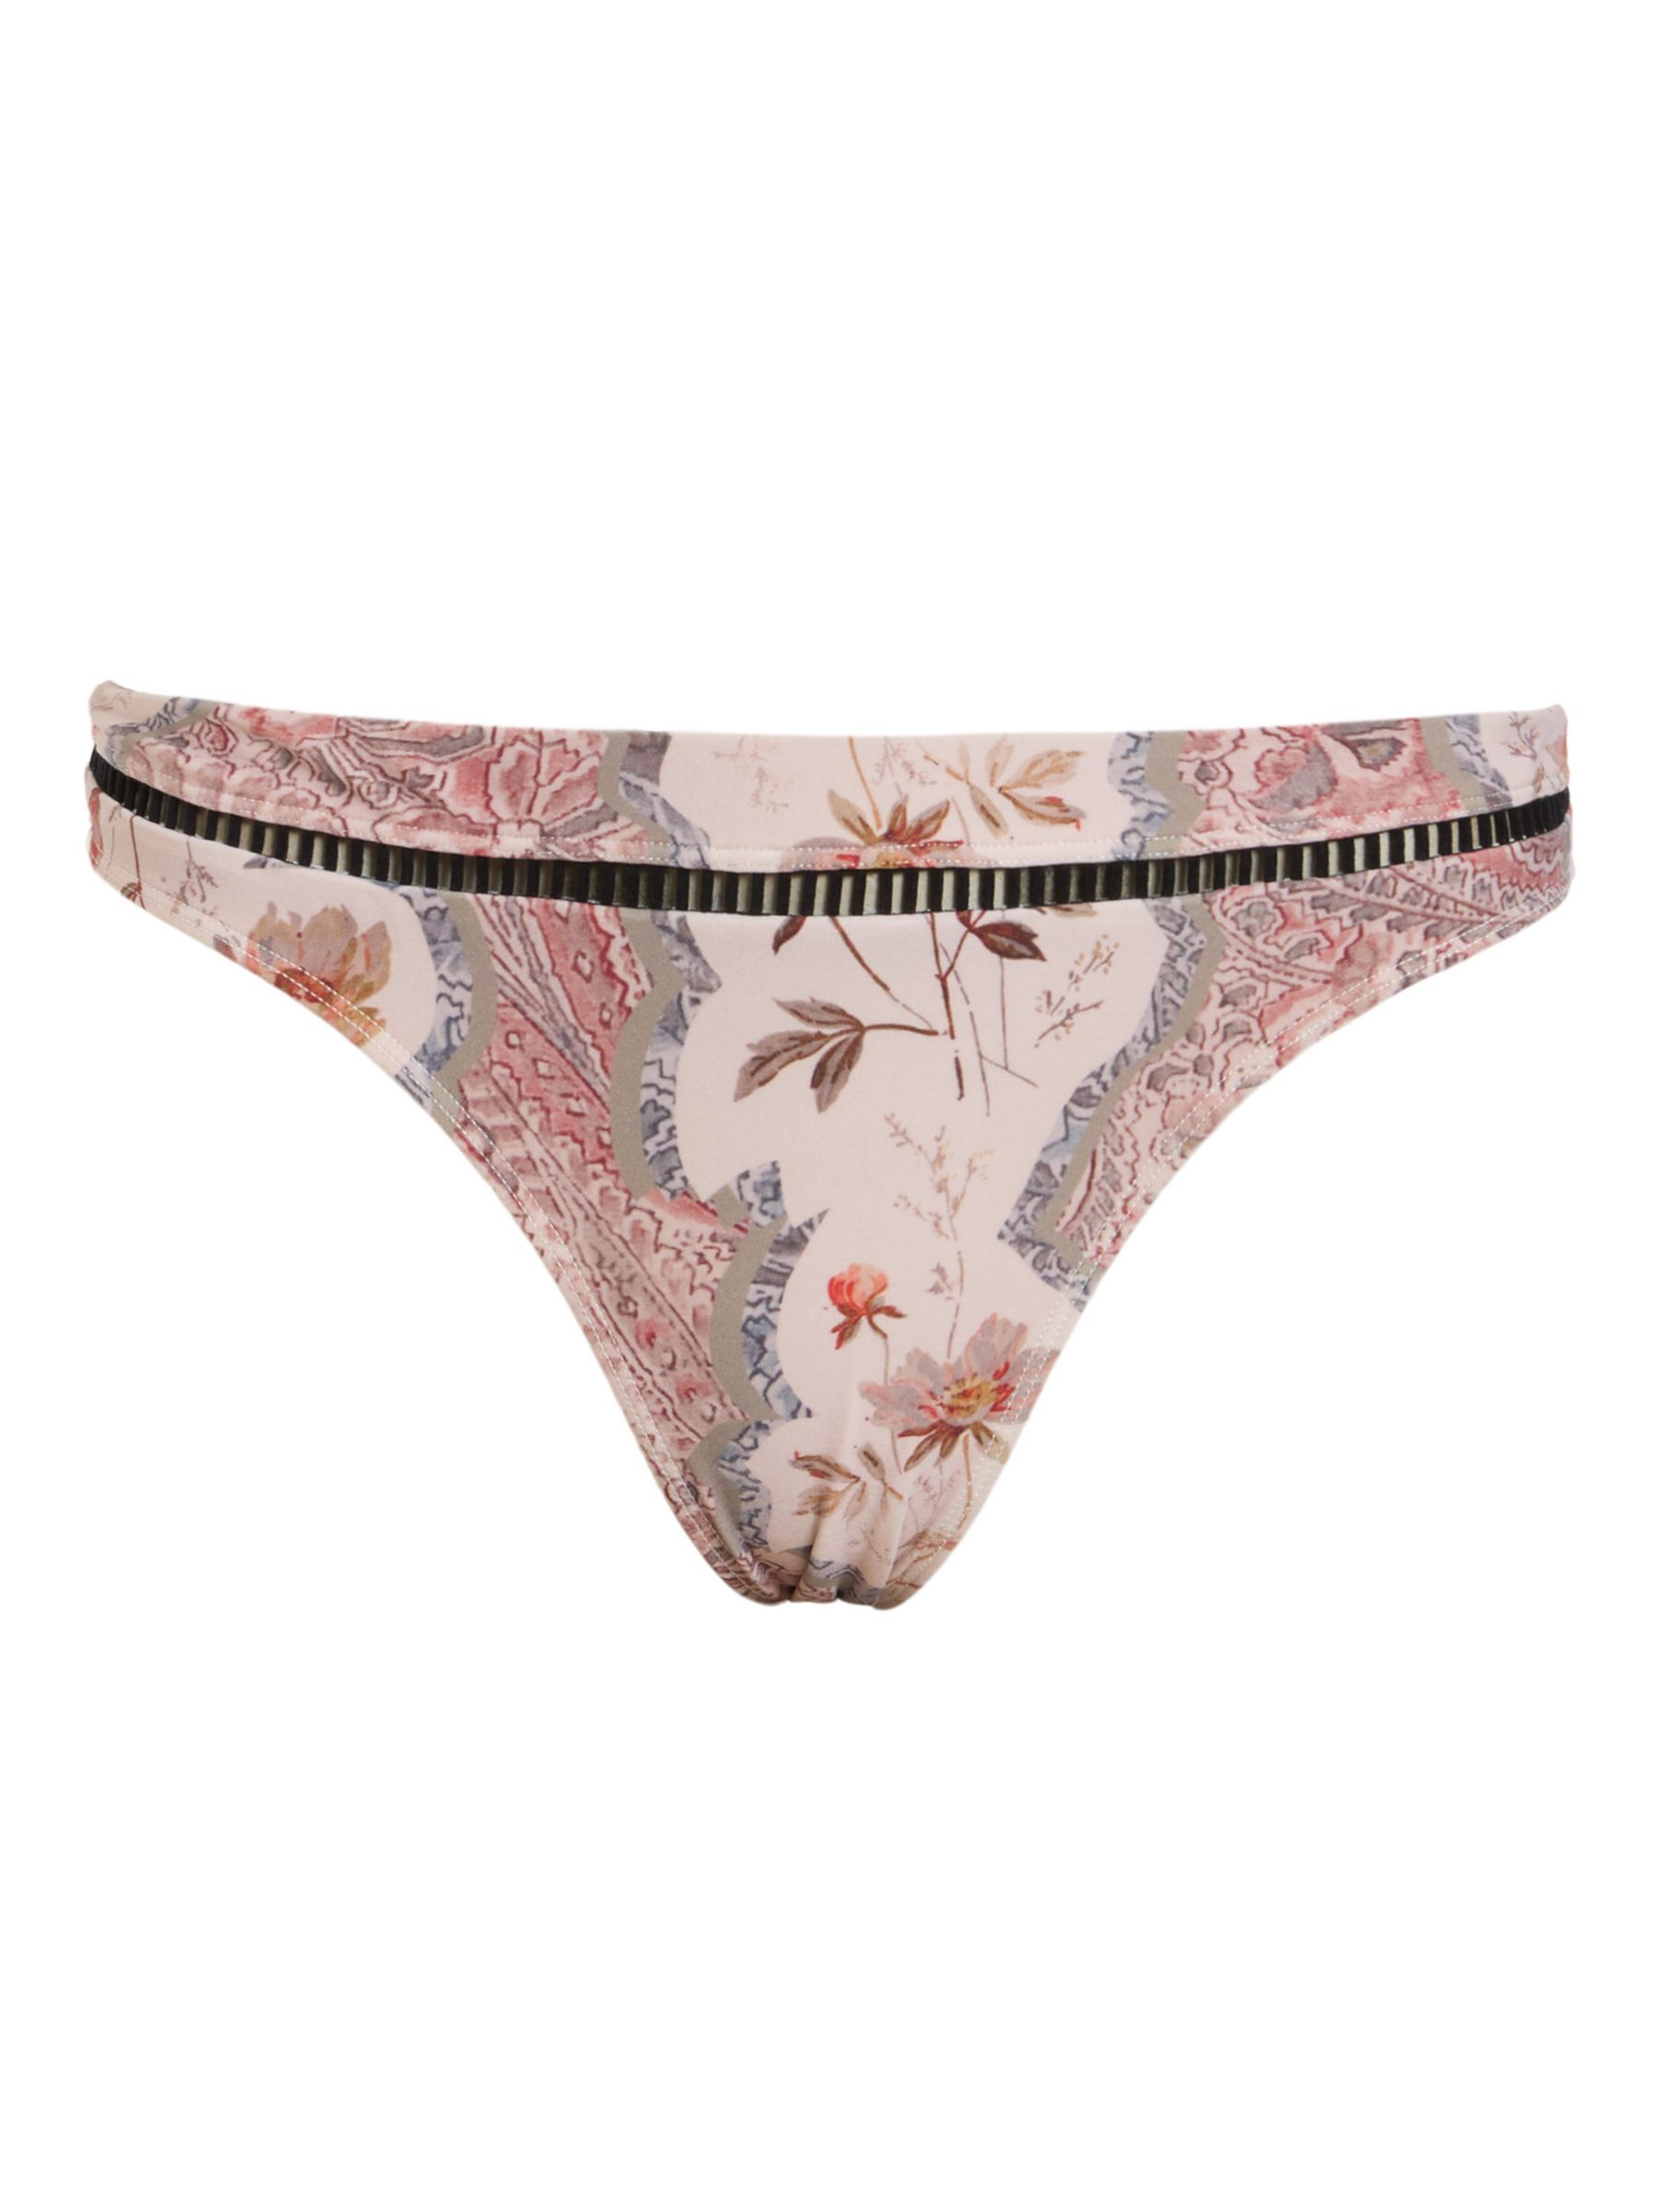 AllSaints Gorah Floral Print Bikini Bottoms, Cascade Clay Pink/Multi, L